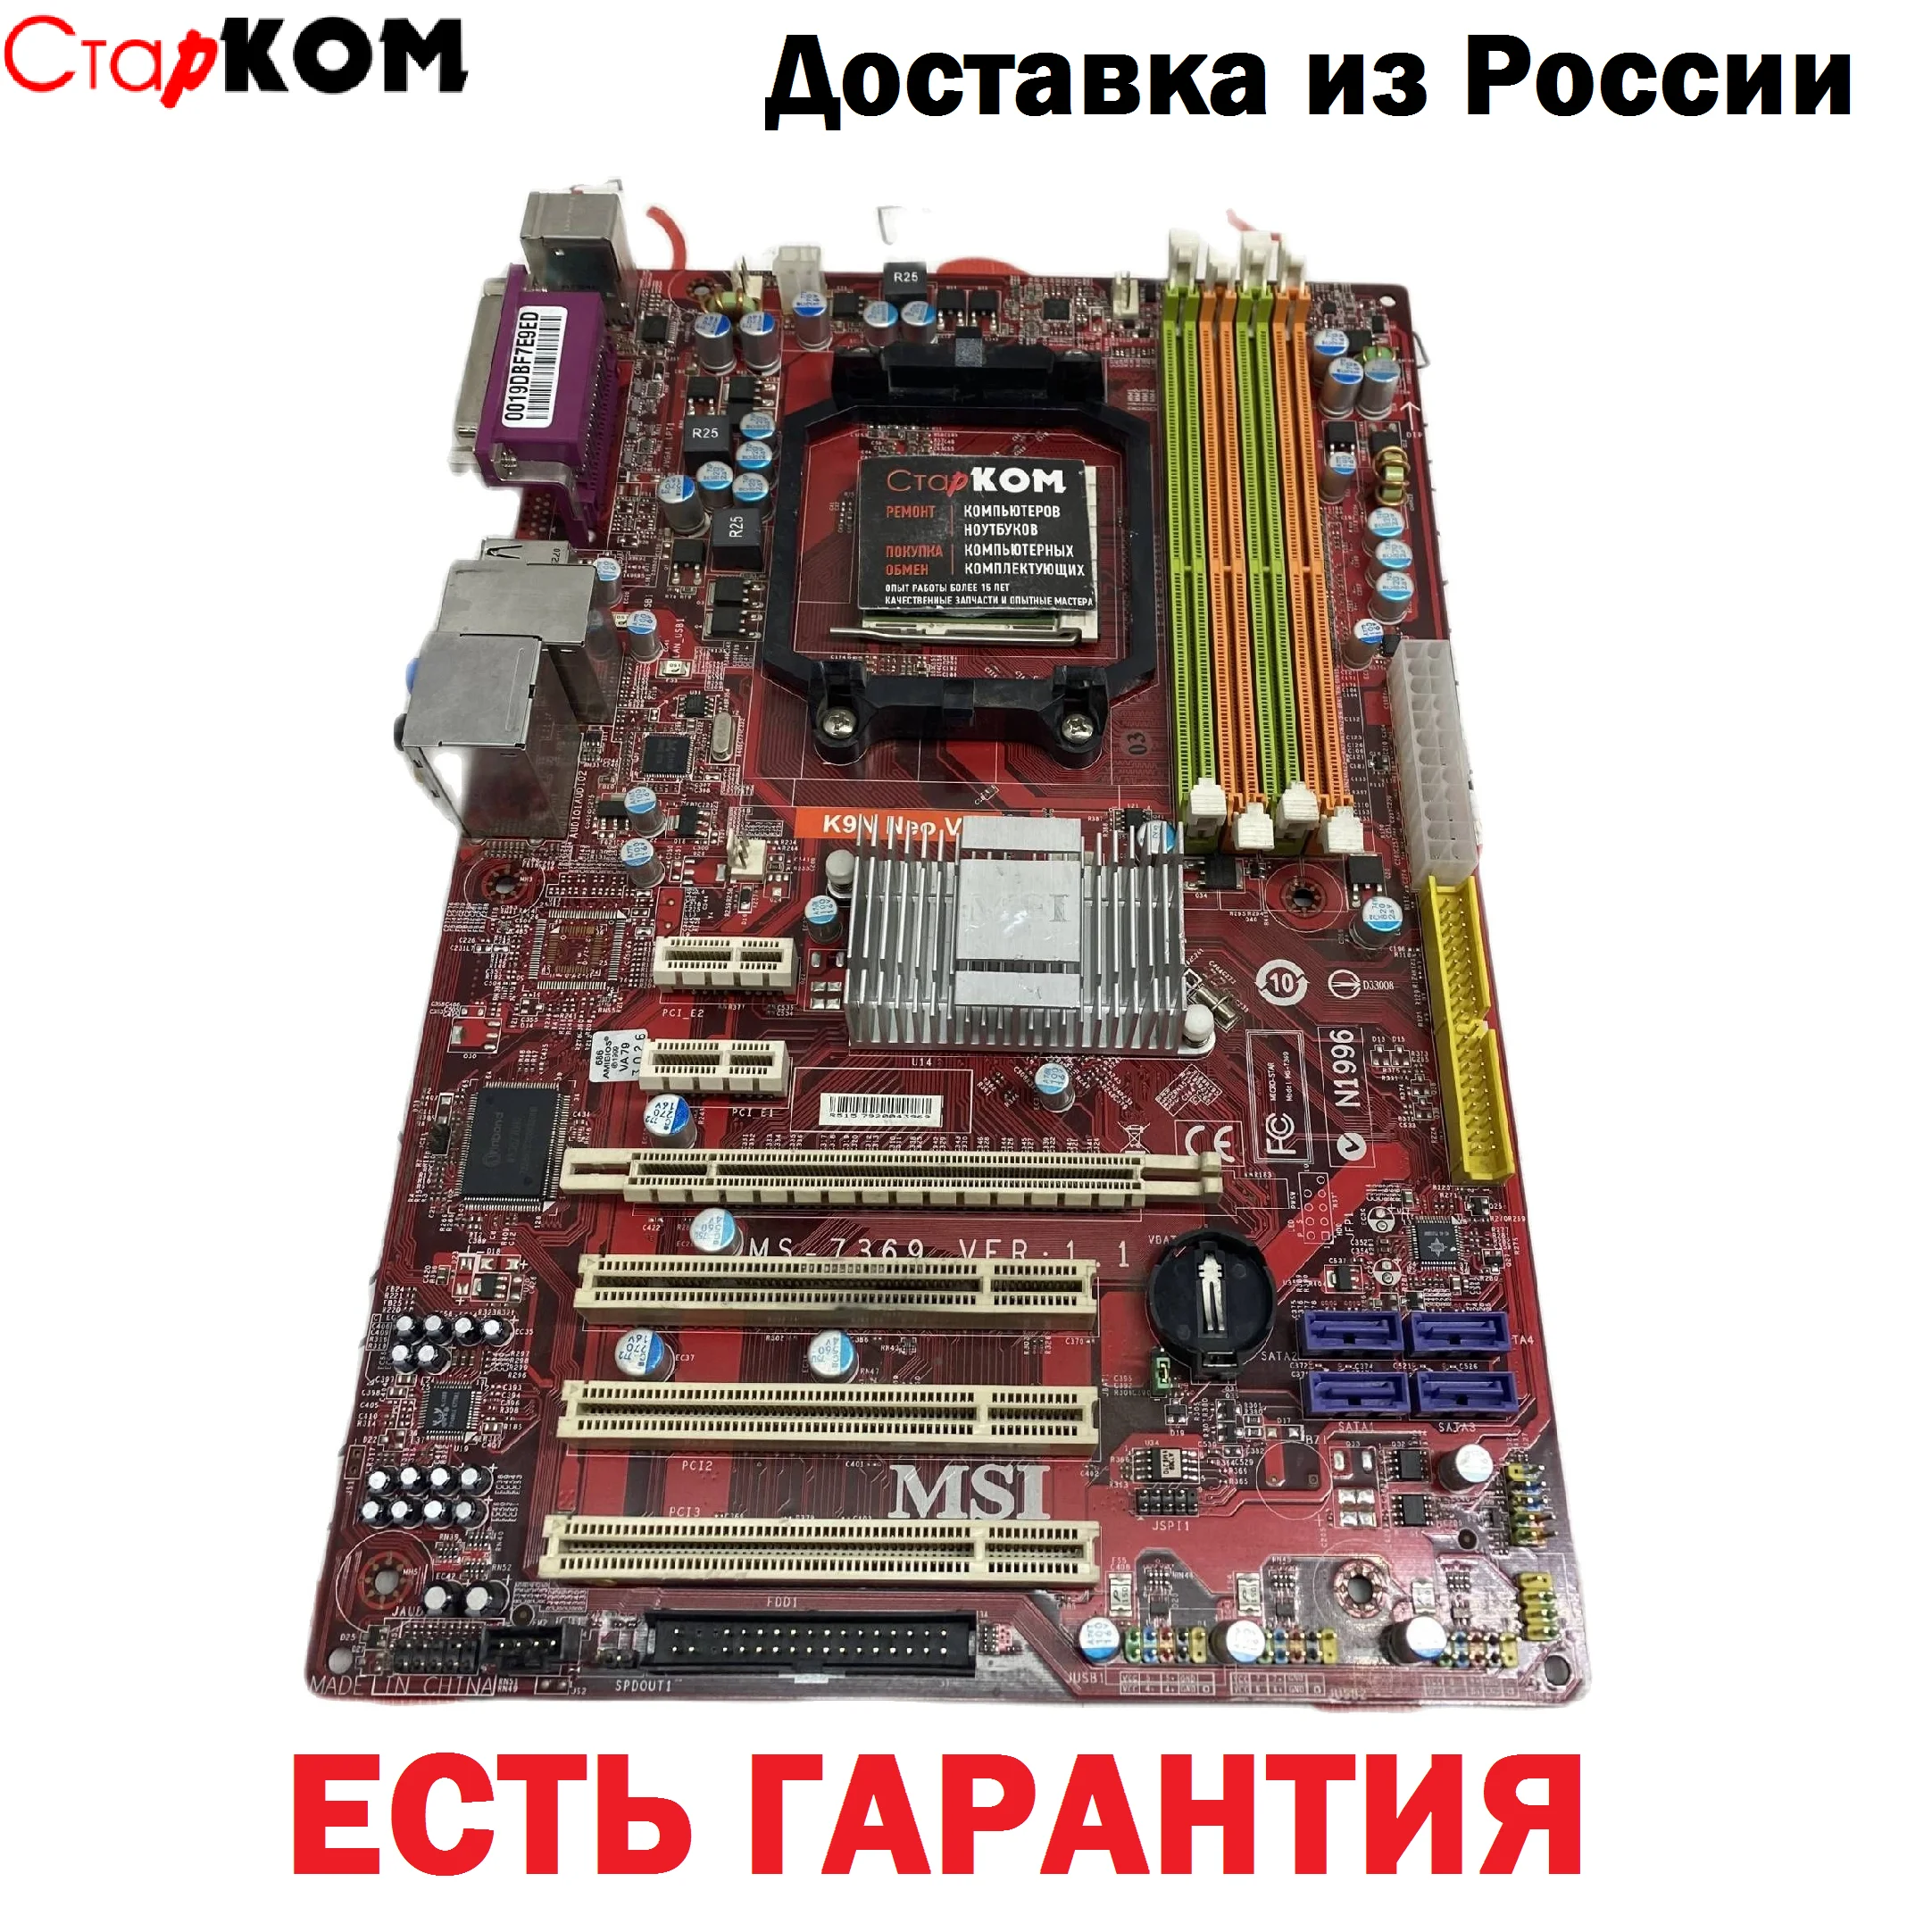 Материнская плата MSI K9N NEO V3 AM2 PC CPU RAM Gaming Mining System Board для учебы работы офиса.